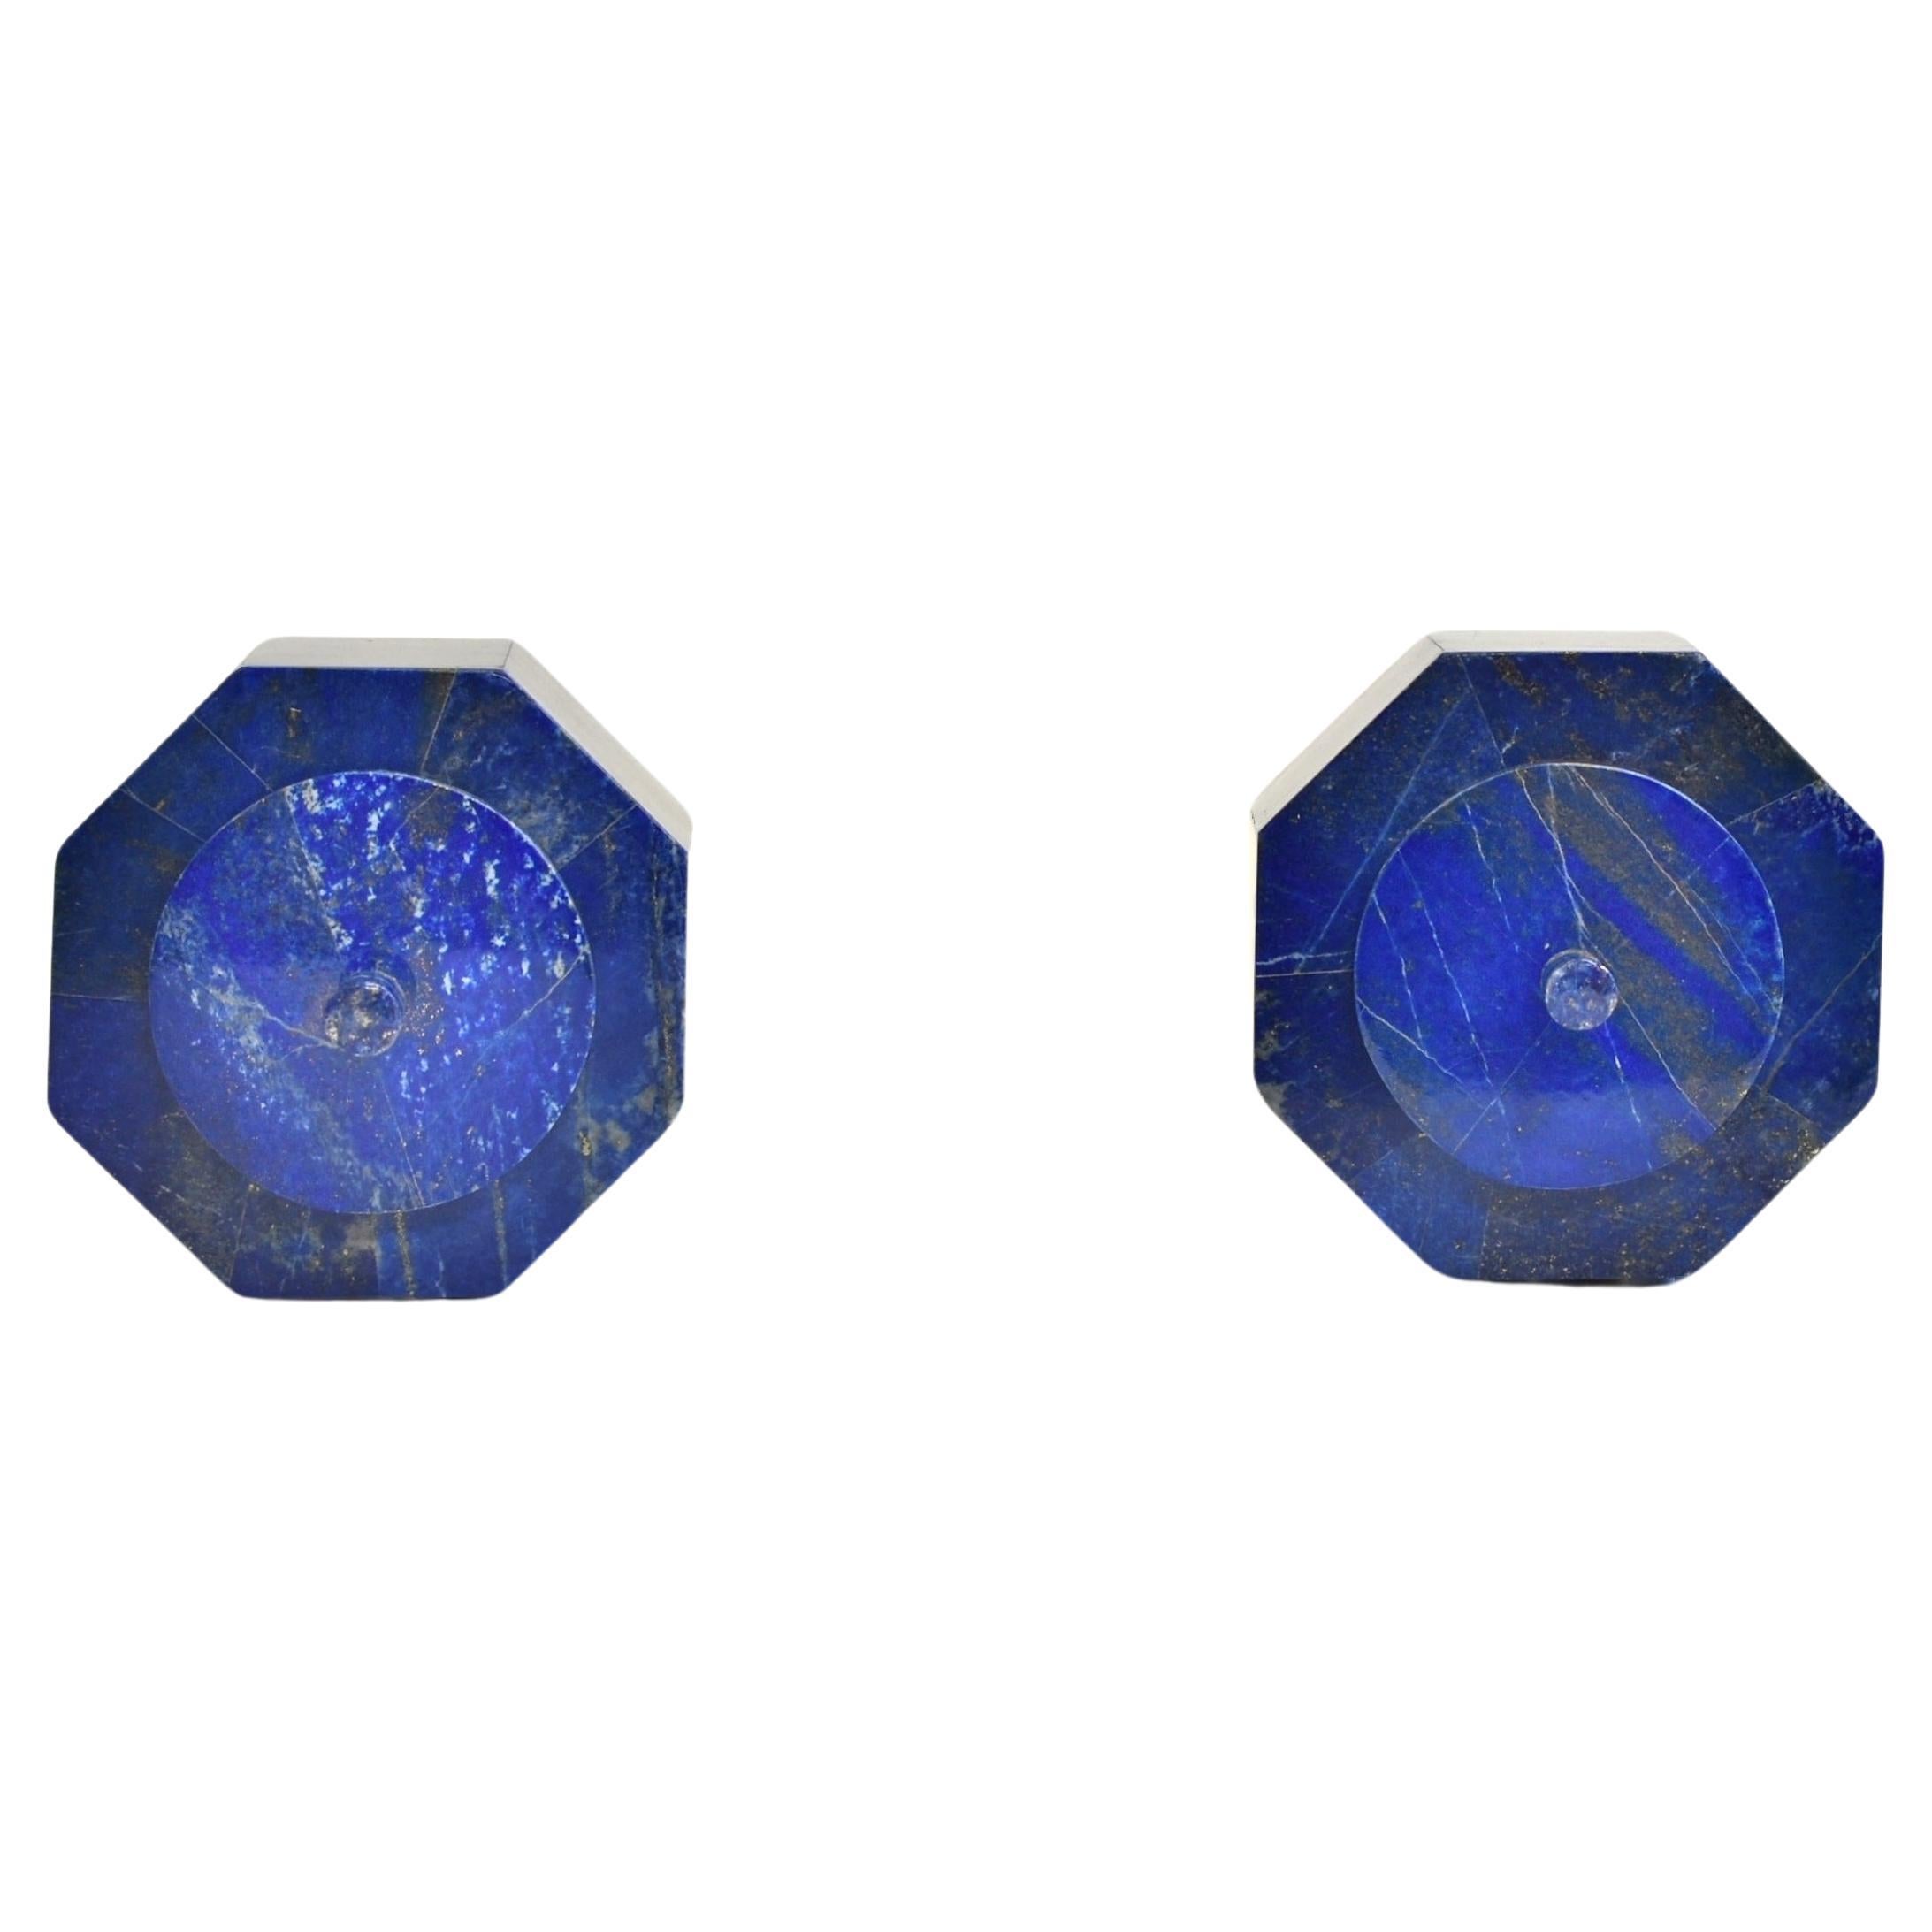 Pair Lapis Lazuli Octagonal Boxes 4" Fine Grade AAA